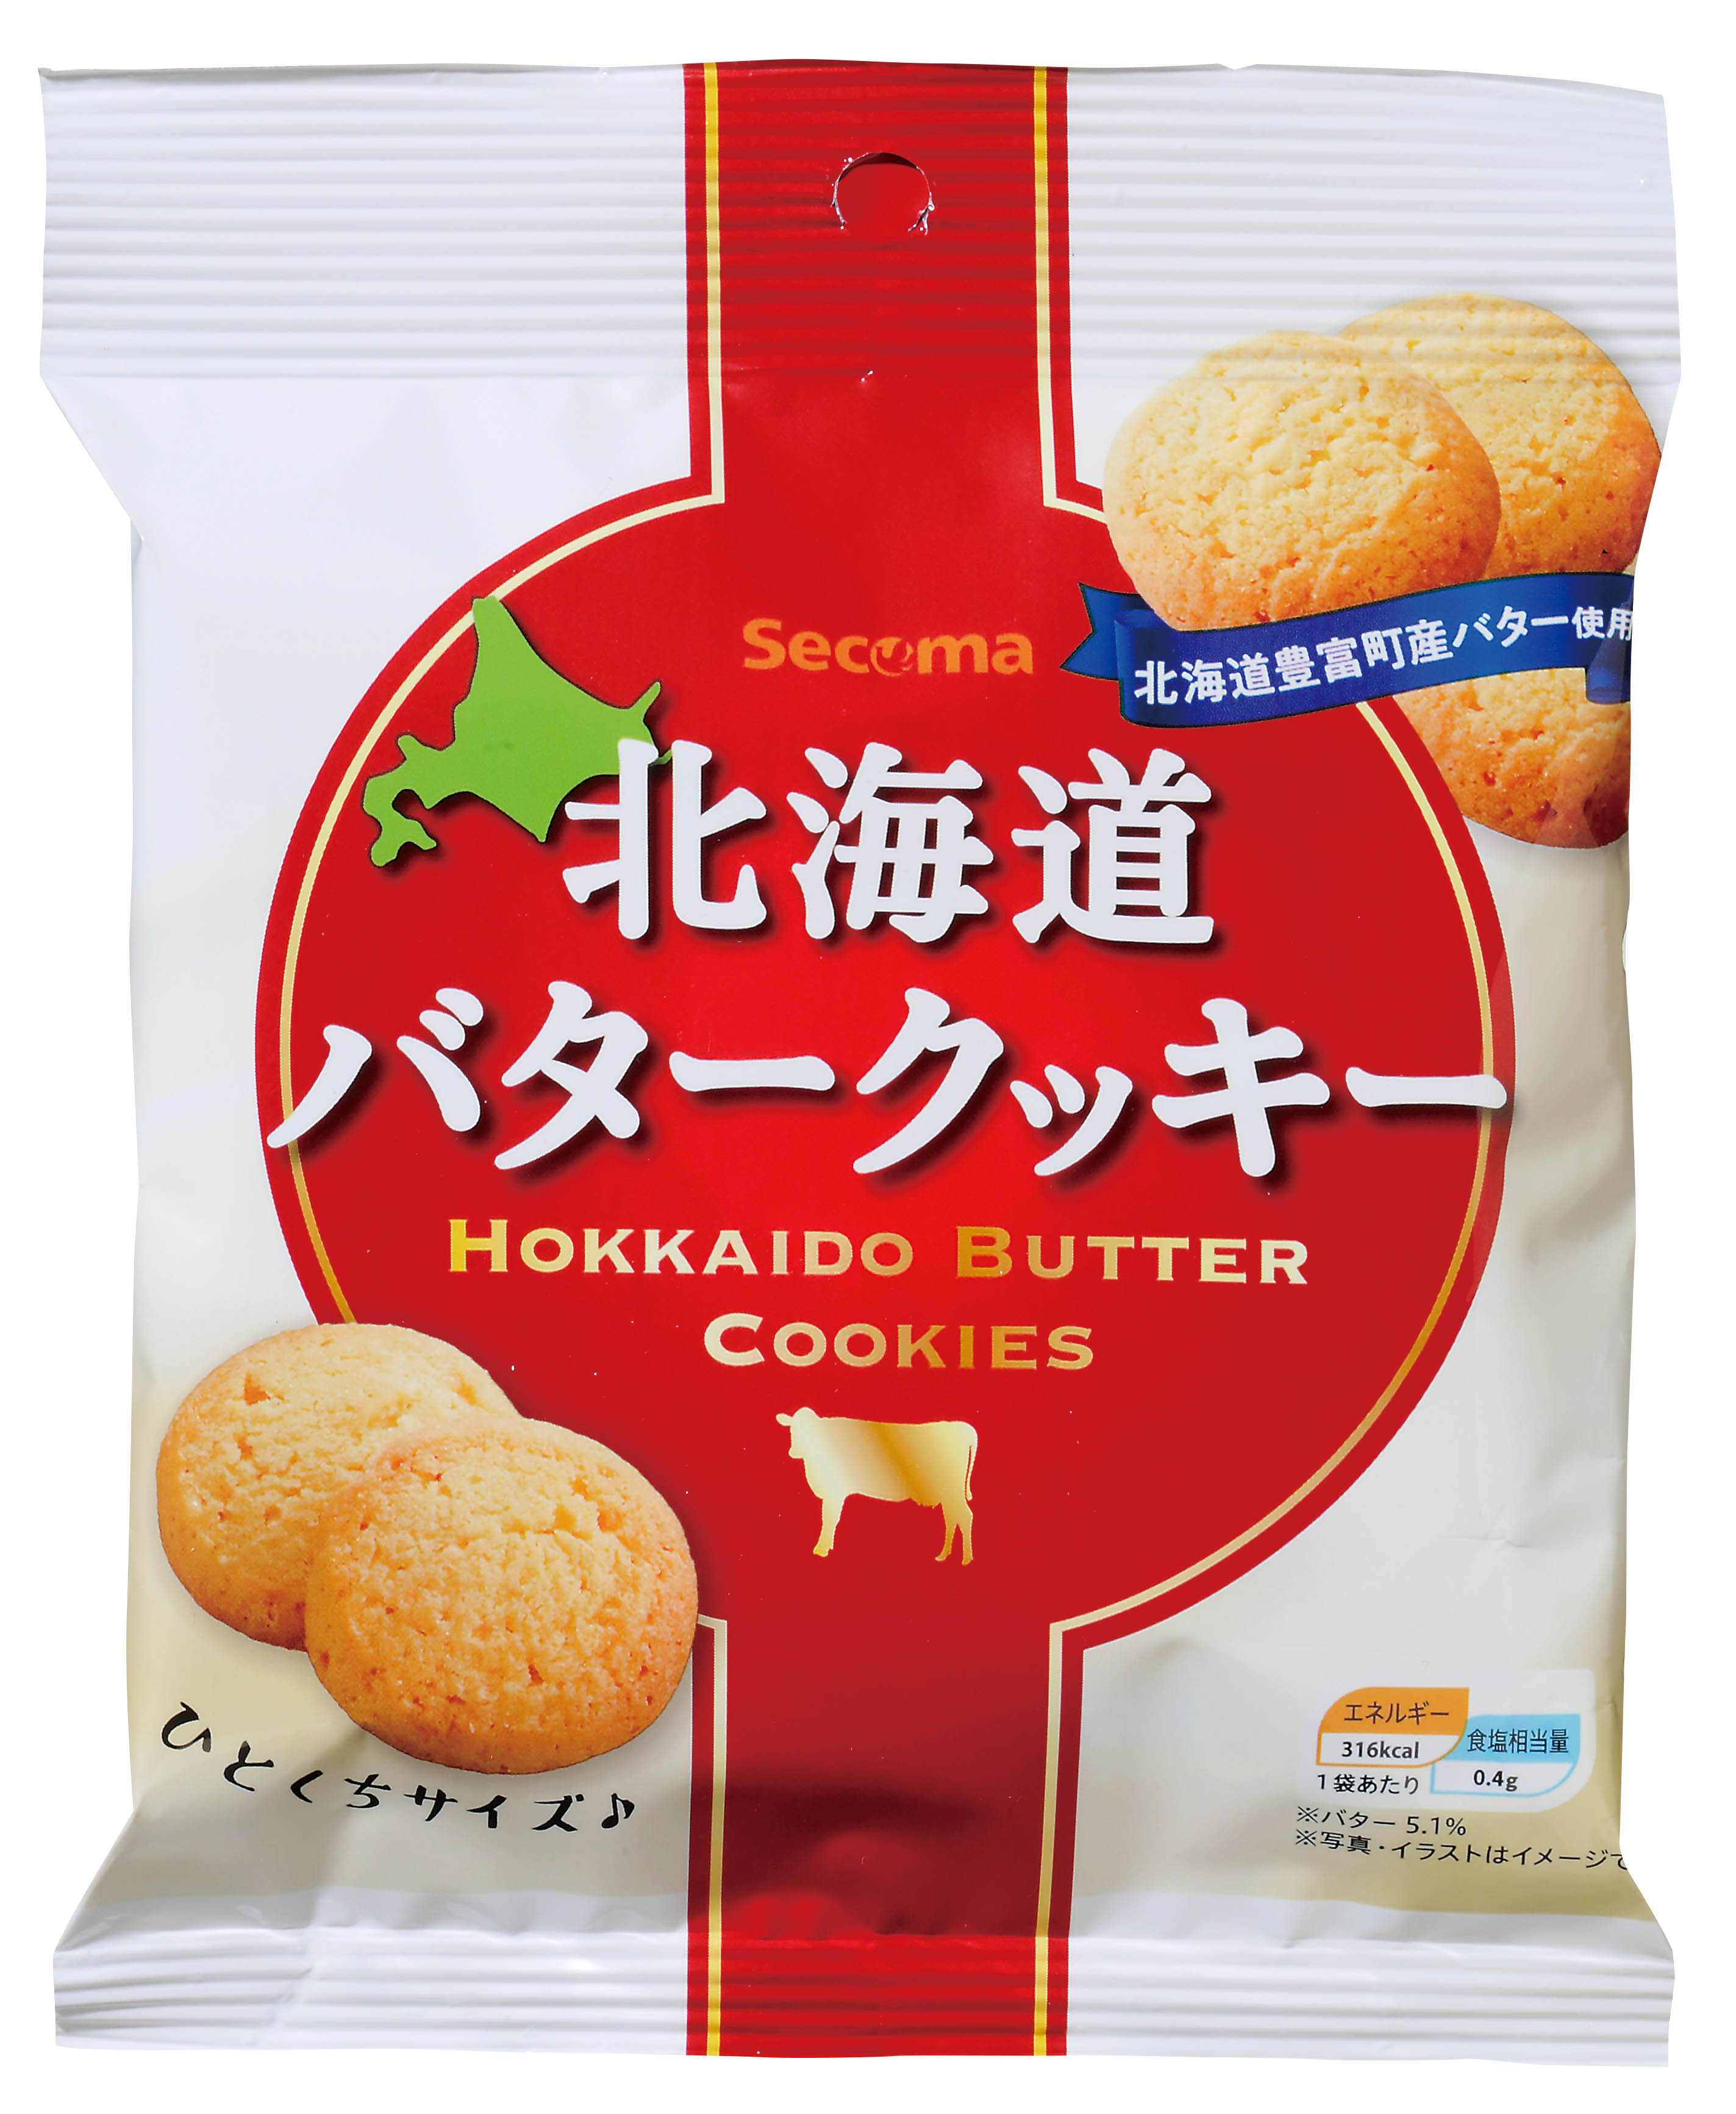 Secoma 北海道バタークッキー 10袋入 セイコーマート公式通販